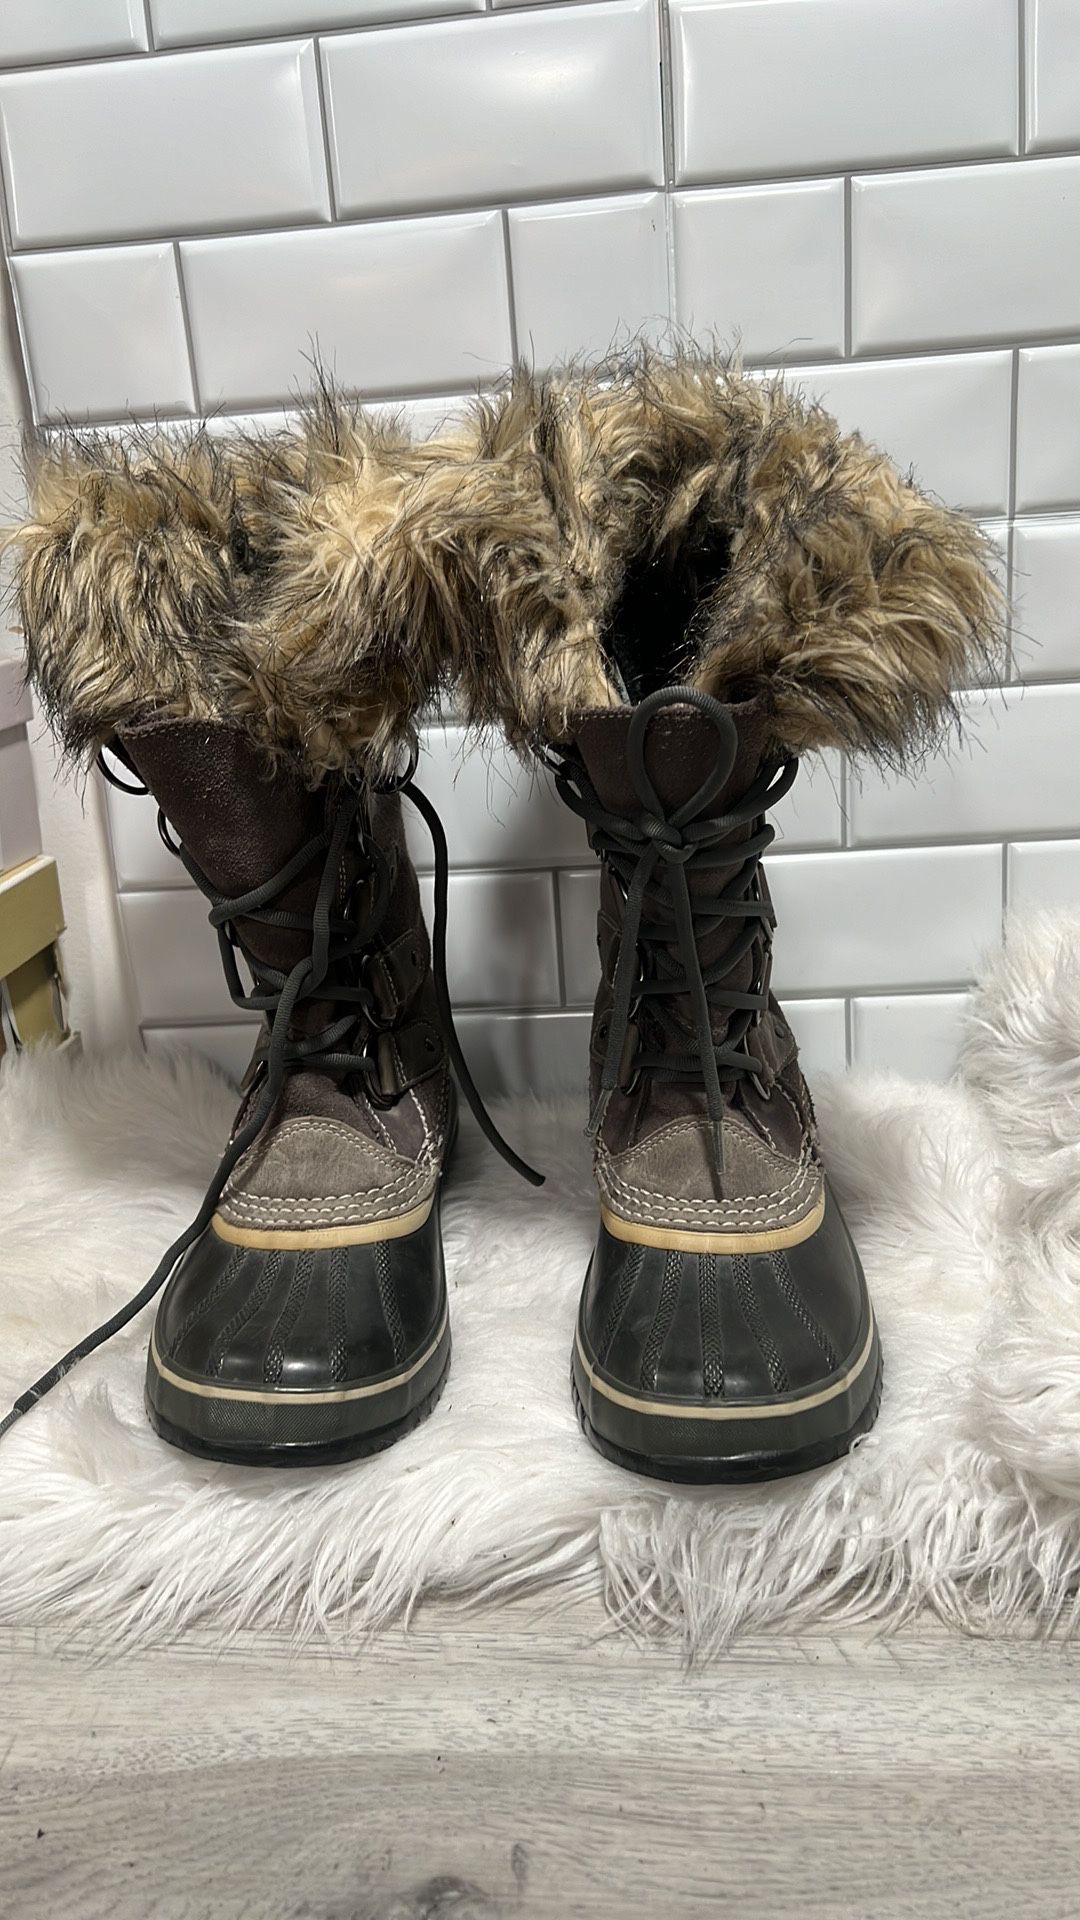 Sorel Joan of Arctic Boots Women's Size 8 Winter Snow Insulated Waterproof Fur